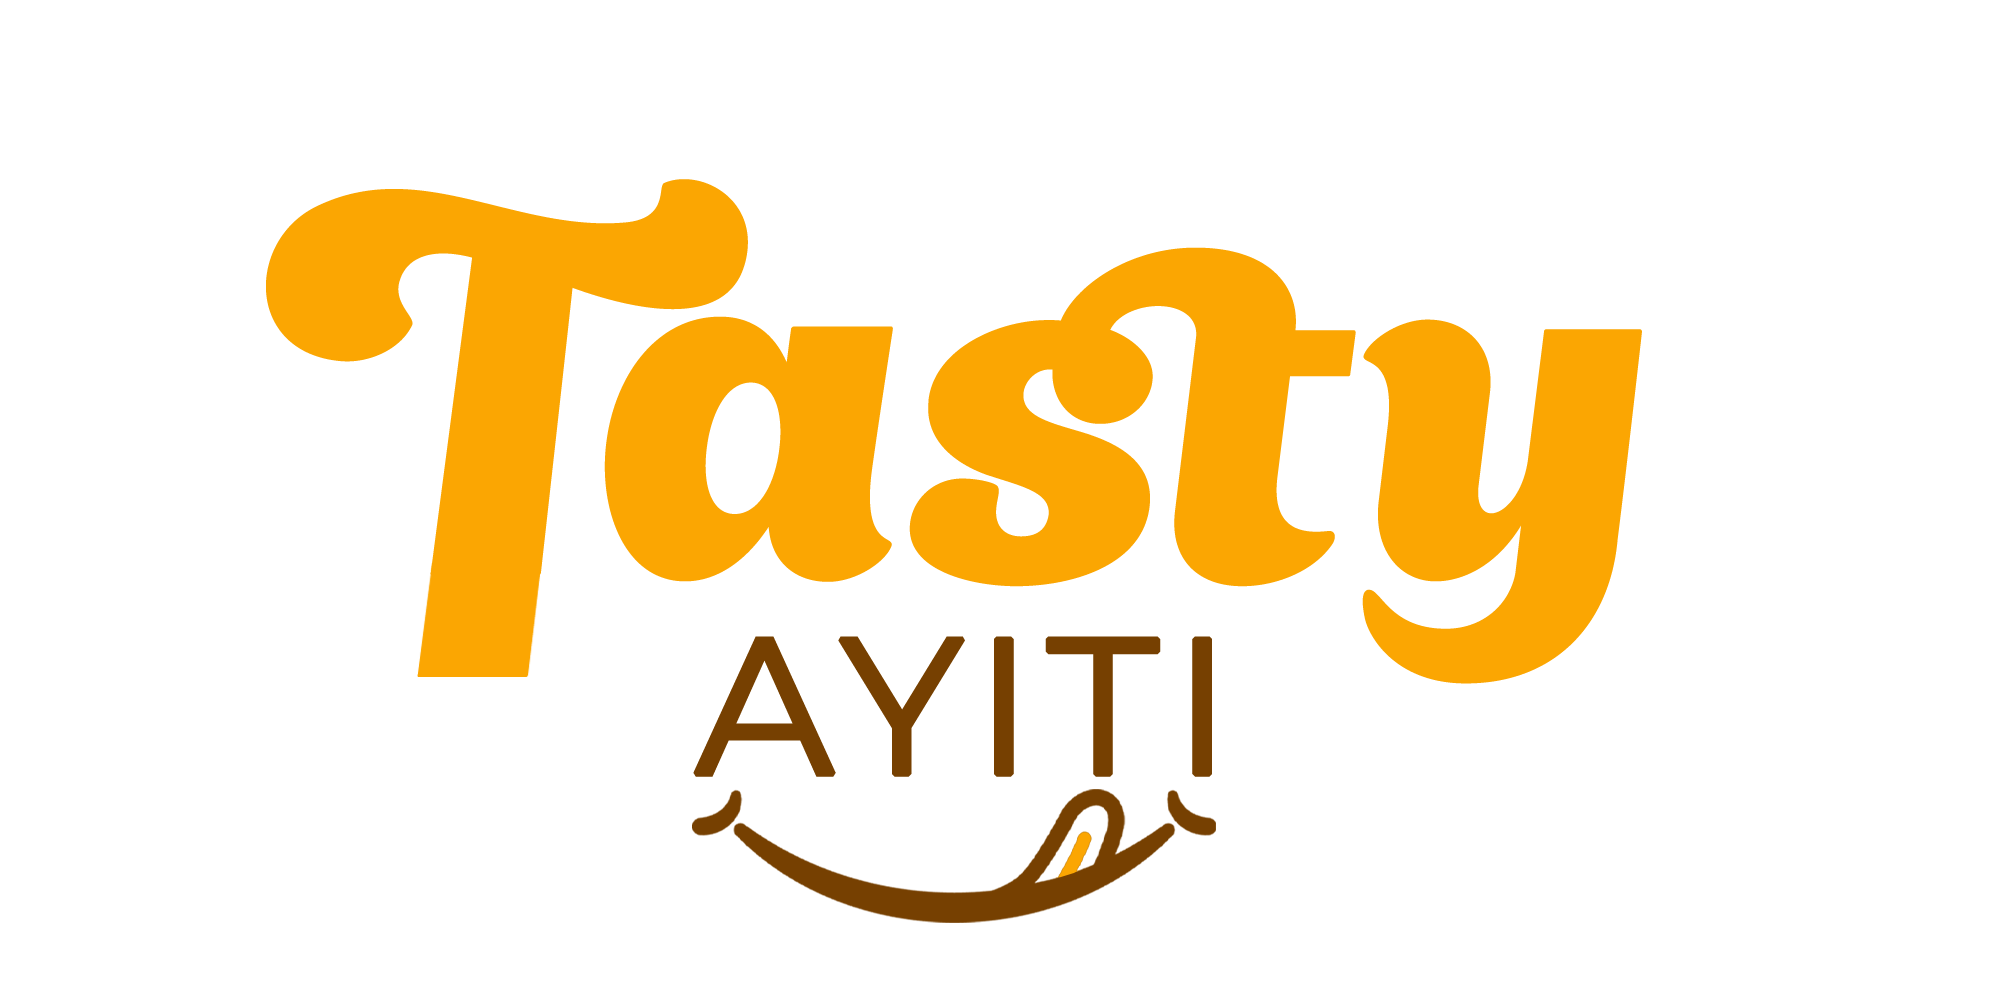 Tasty Ayiti